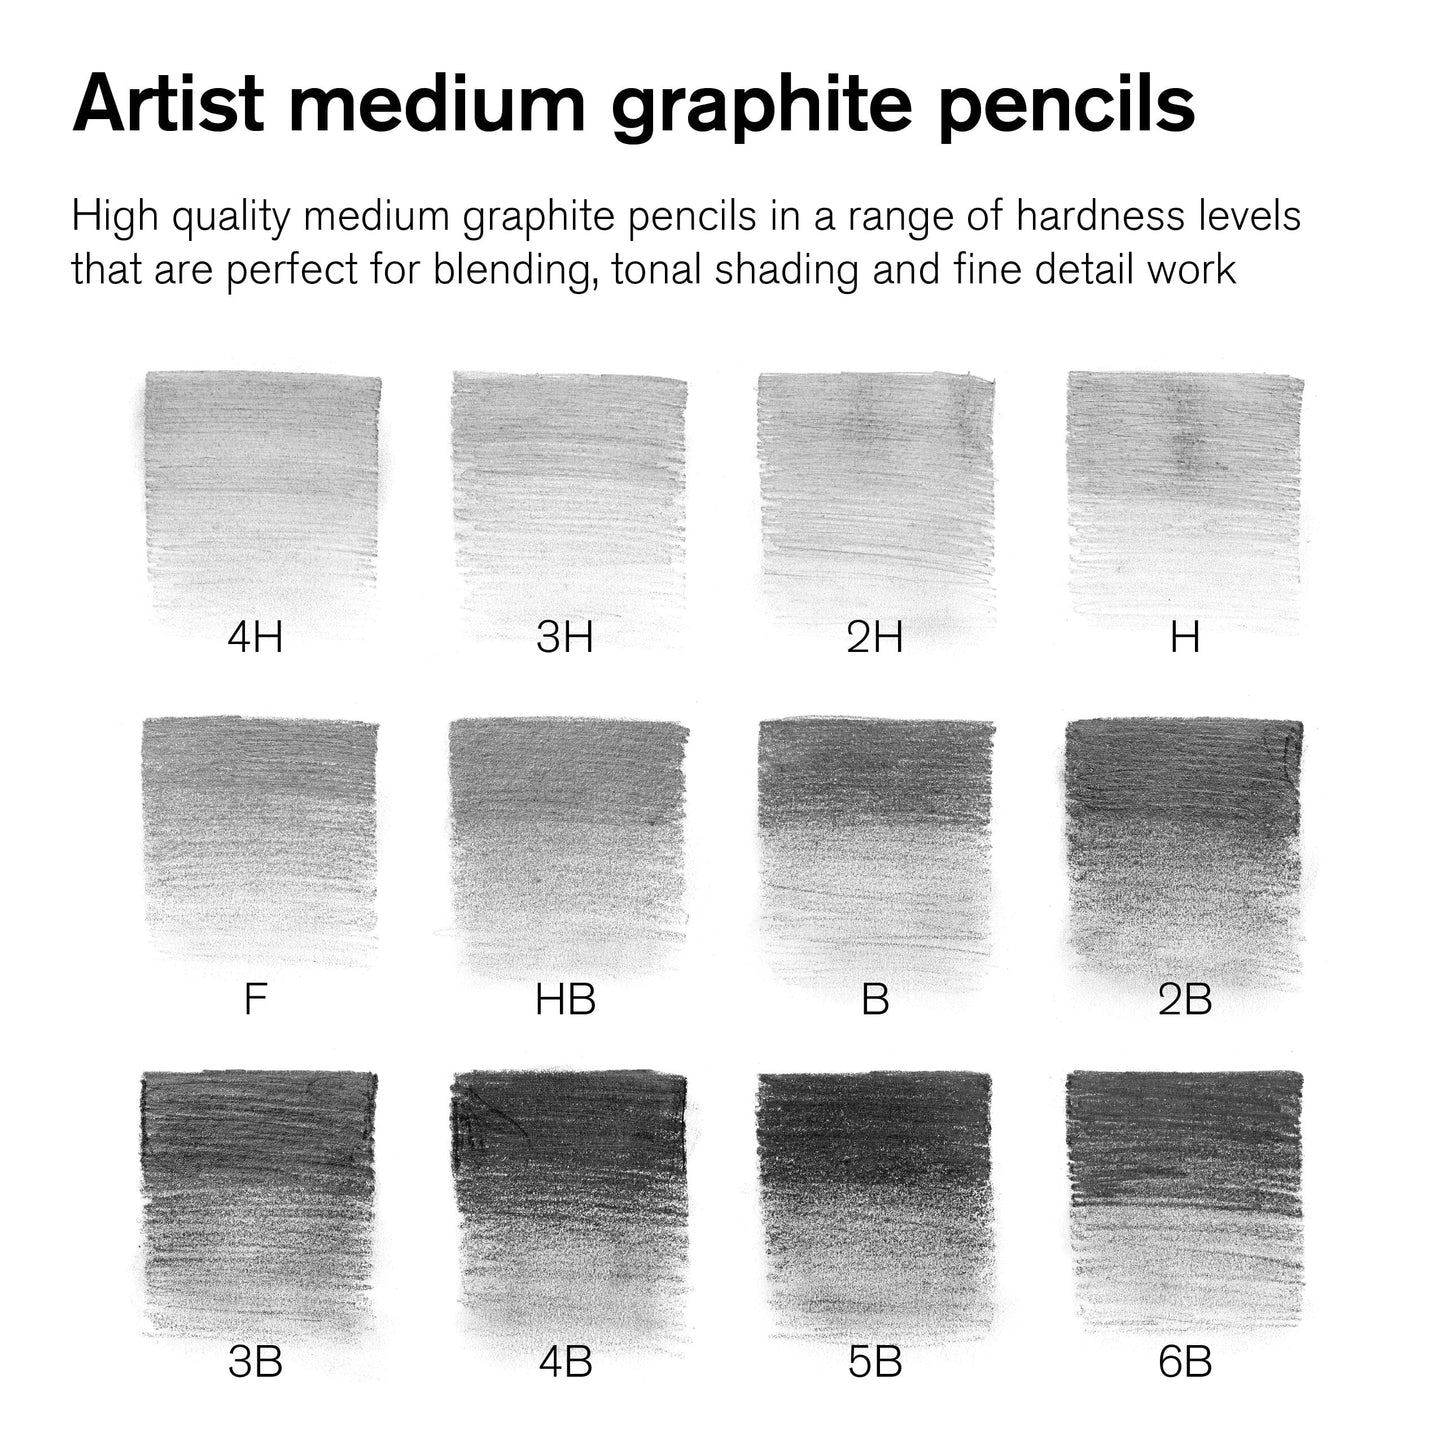 Winsor & Newton Graphite Pencil Set Winsor & Newton - Graphite Pencils - Set of 12 - Item #0490008